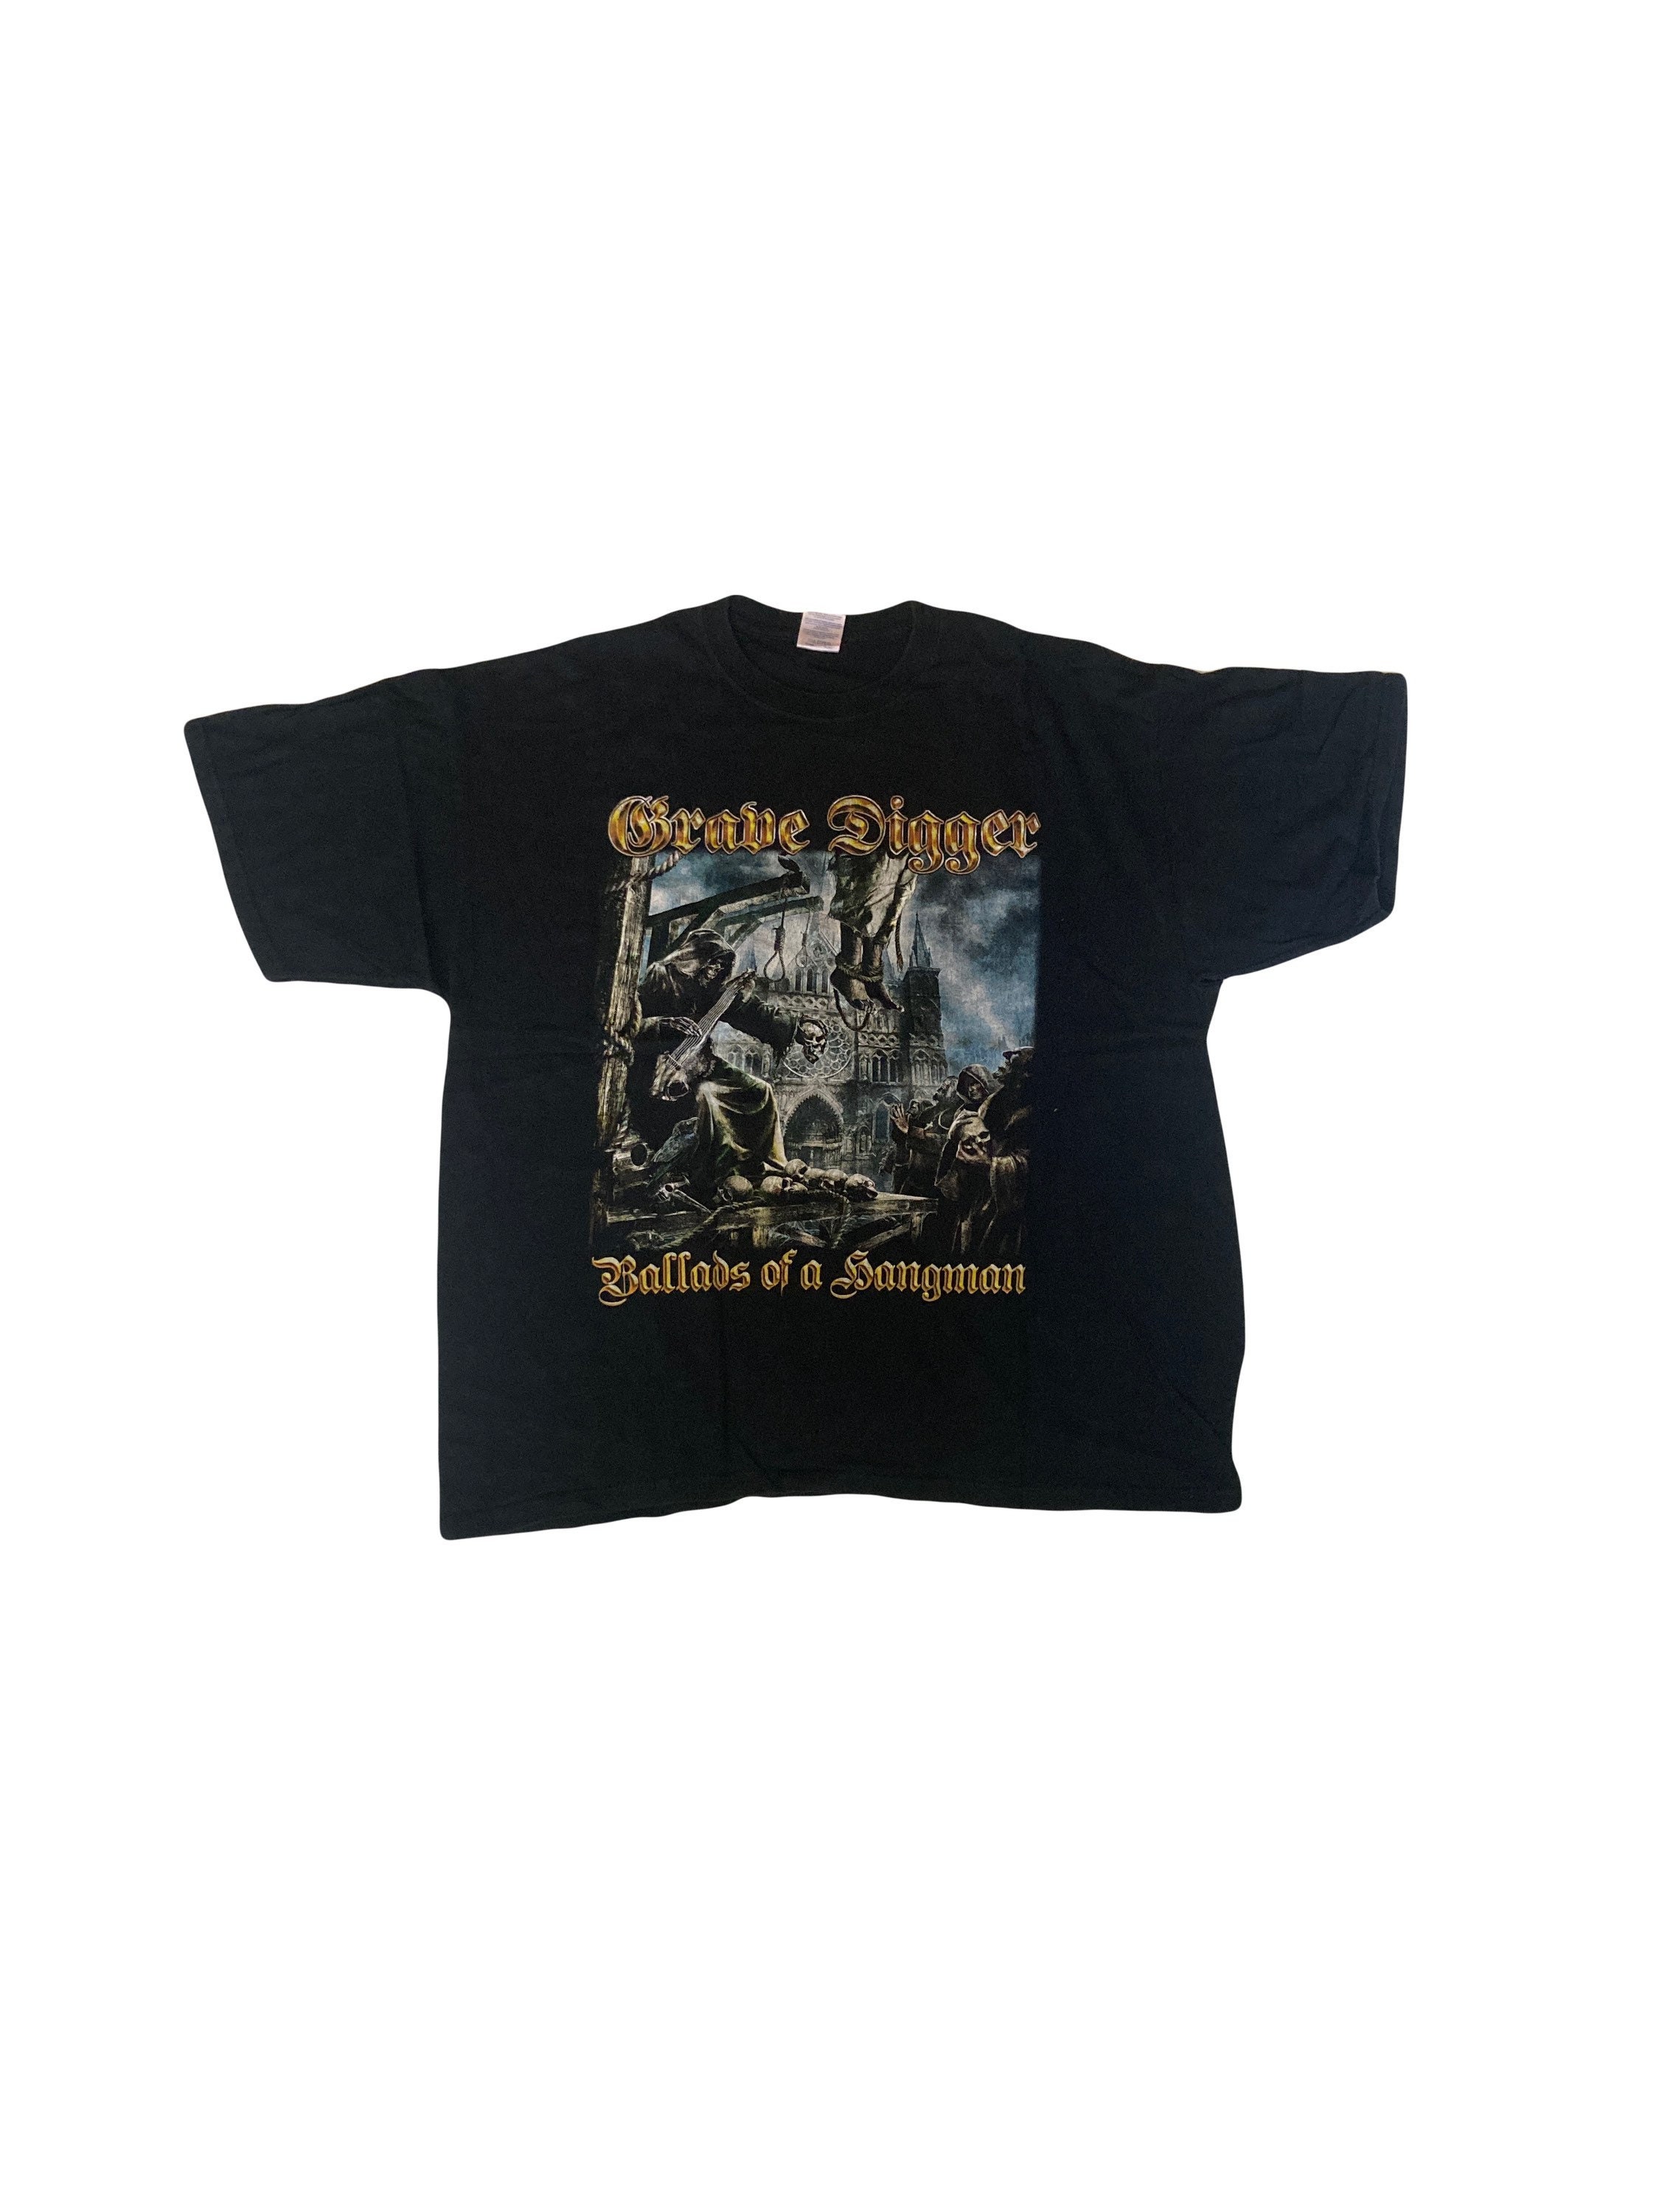 Top Gun: Maverick - Hangman - Men's Short Sleeve Graphic T-Shirt 